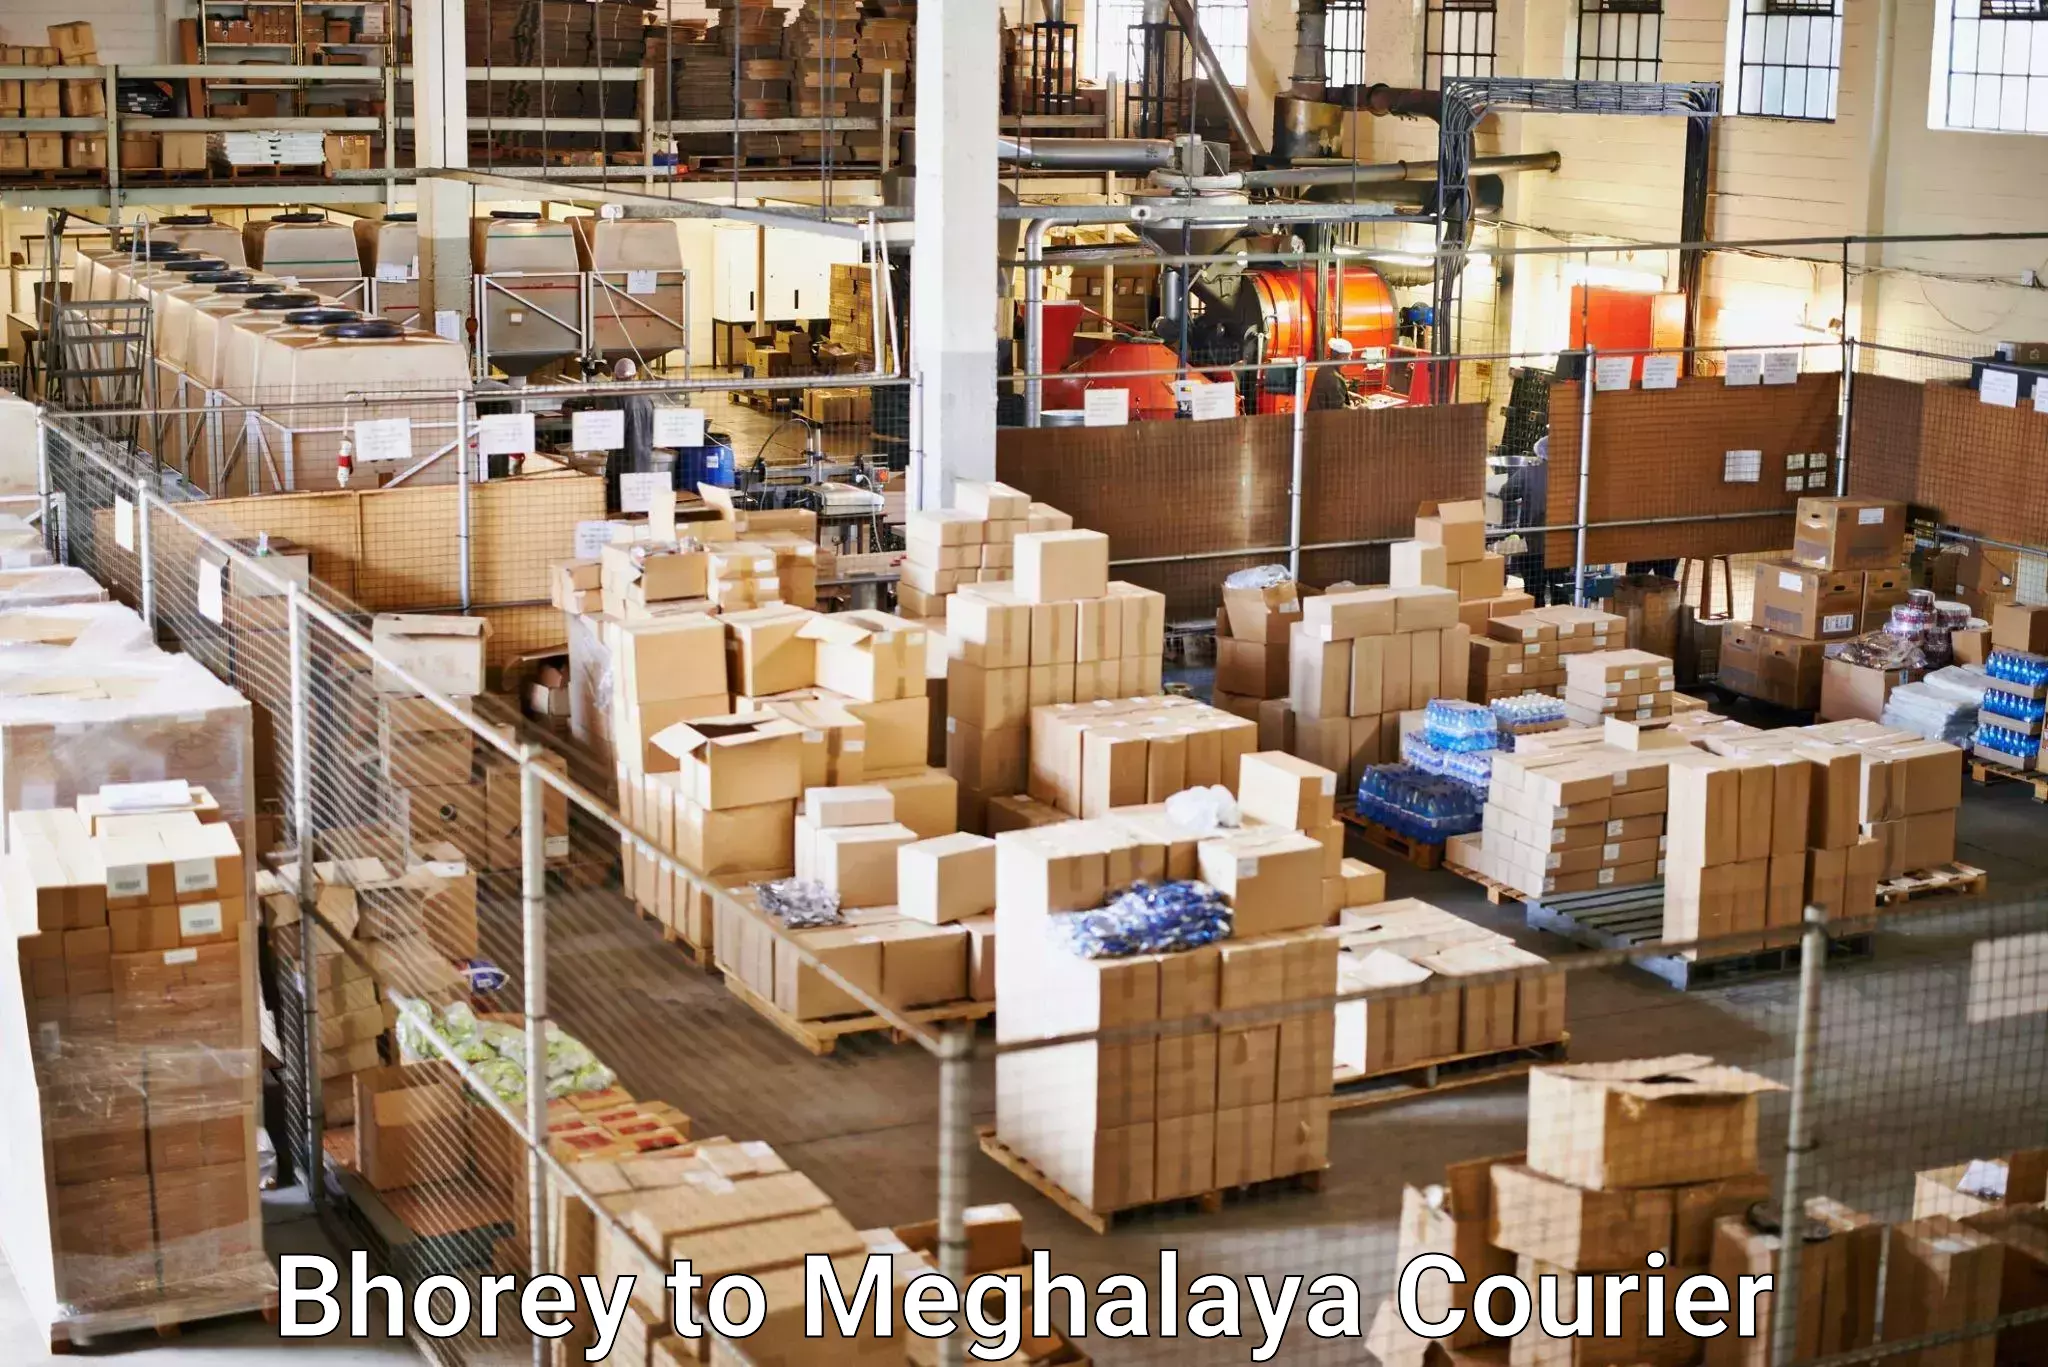 Nationwide shipping capabilities Bhorey to Meghalaya